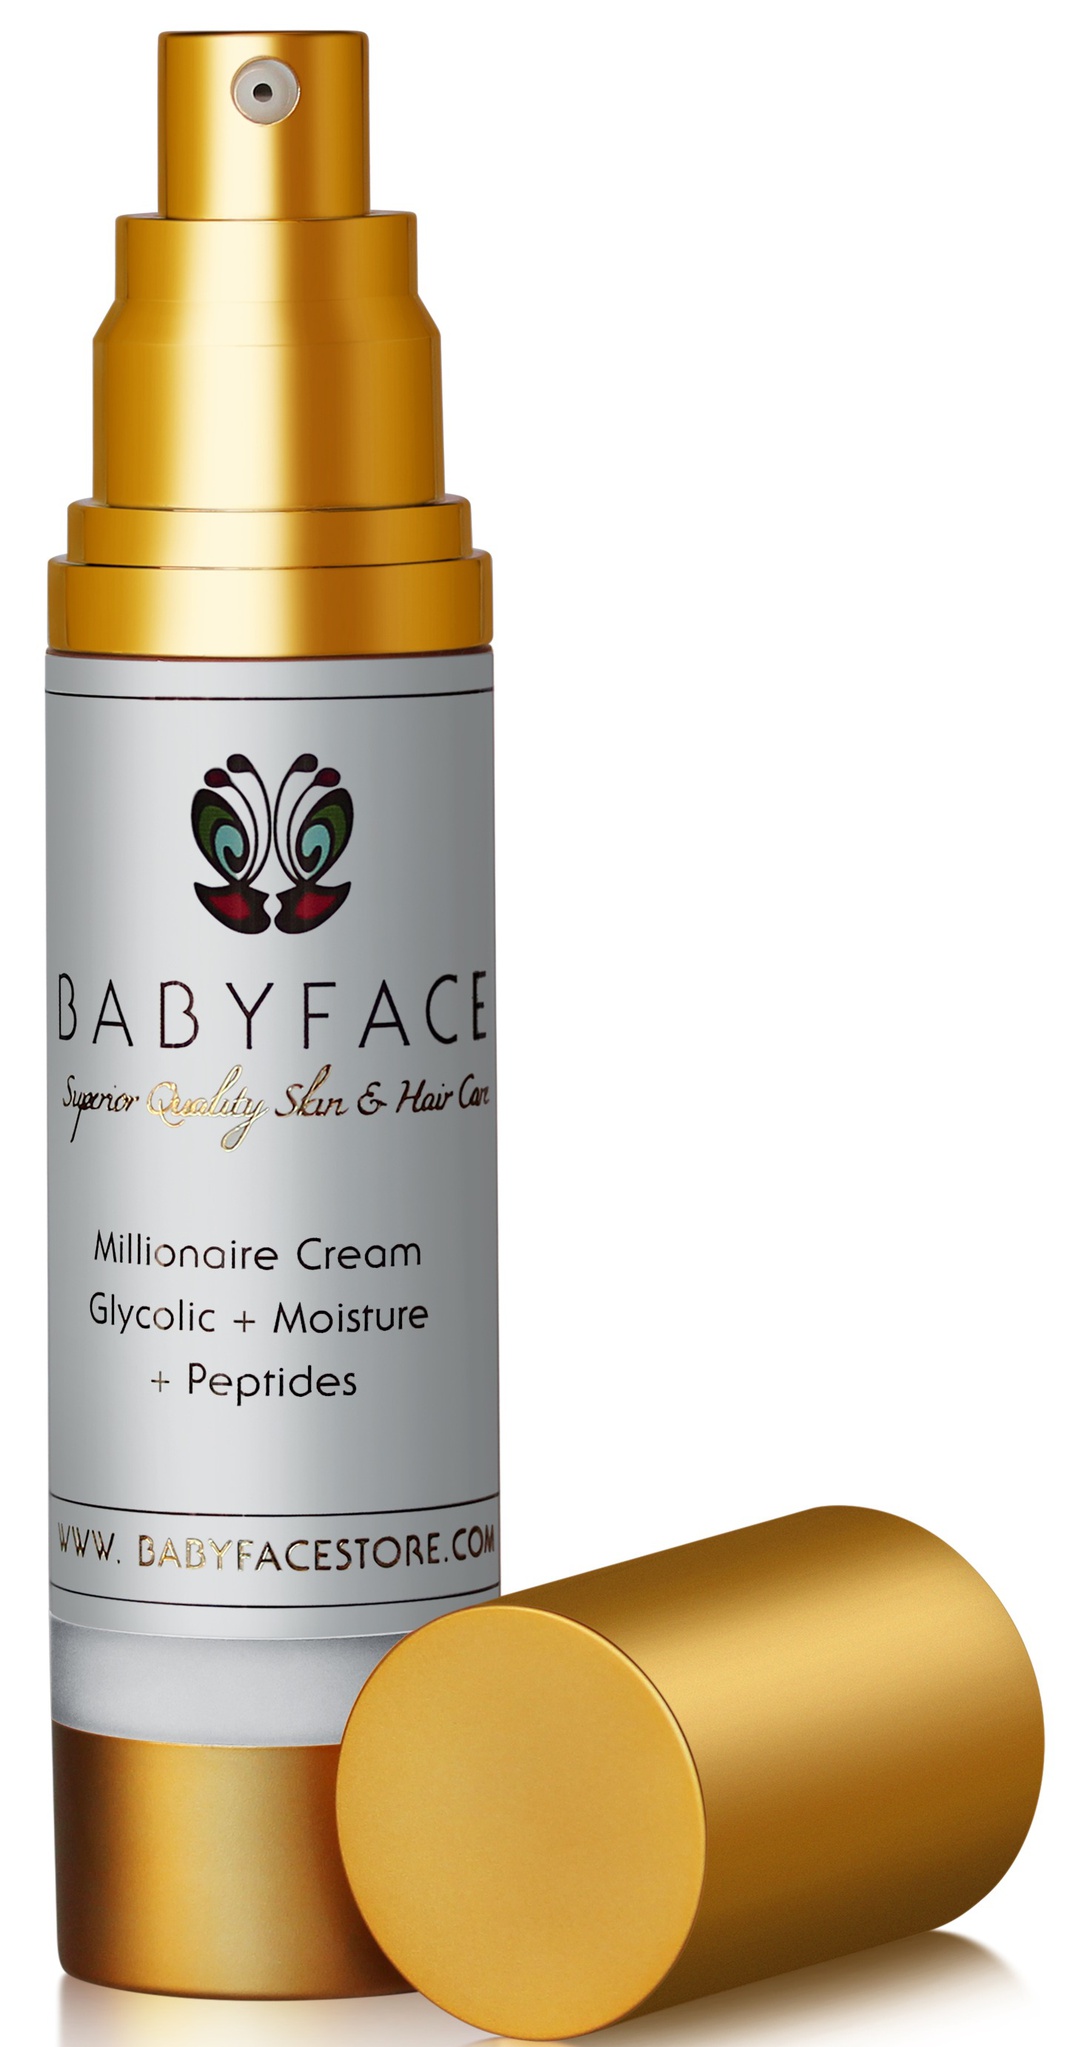 Babyface  Millionaire Cream  Glycolic + Moisture + Peptides